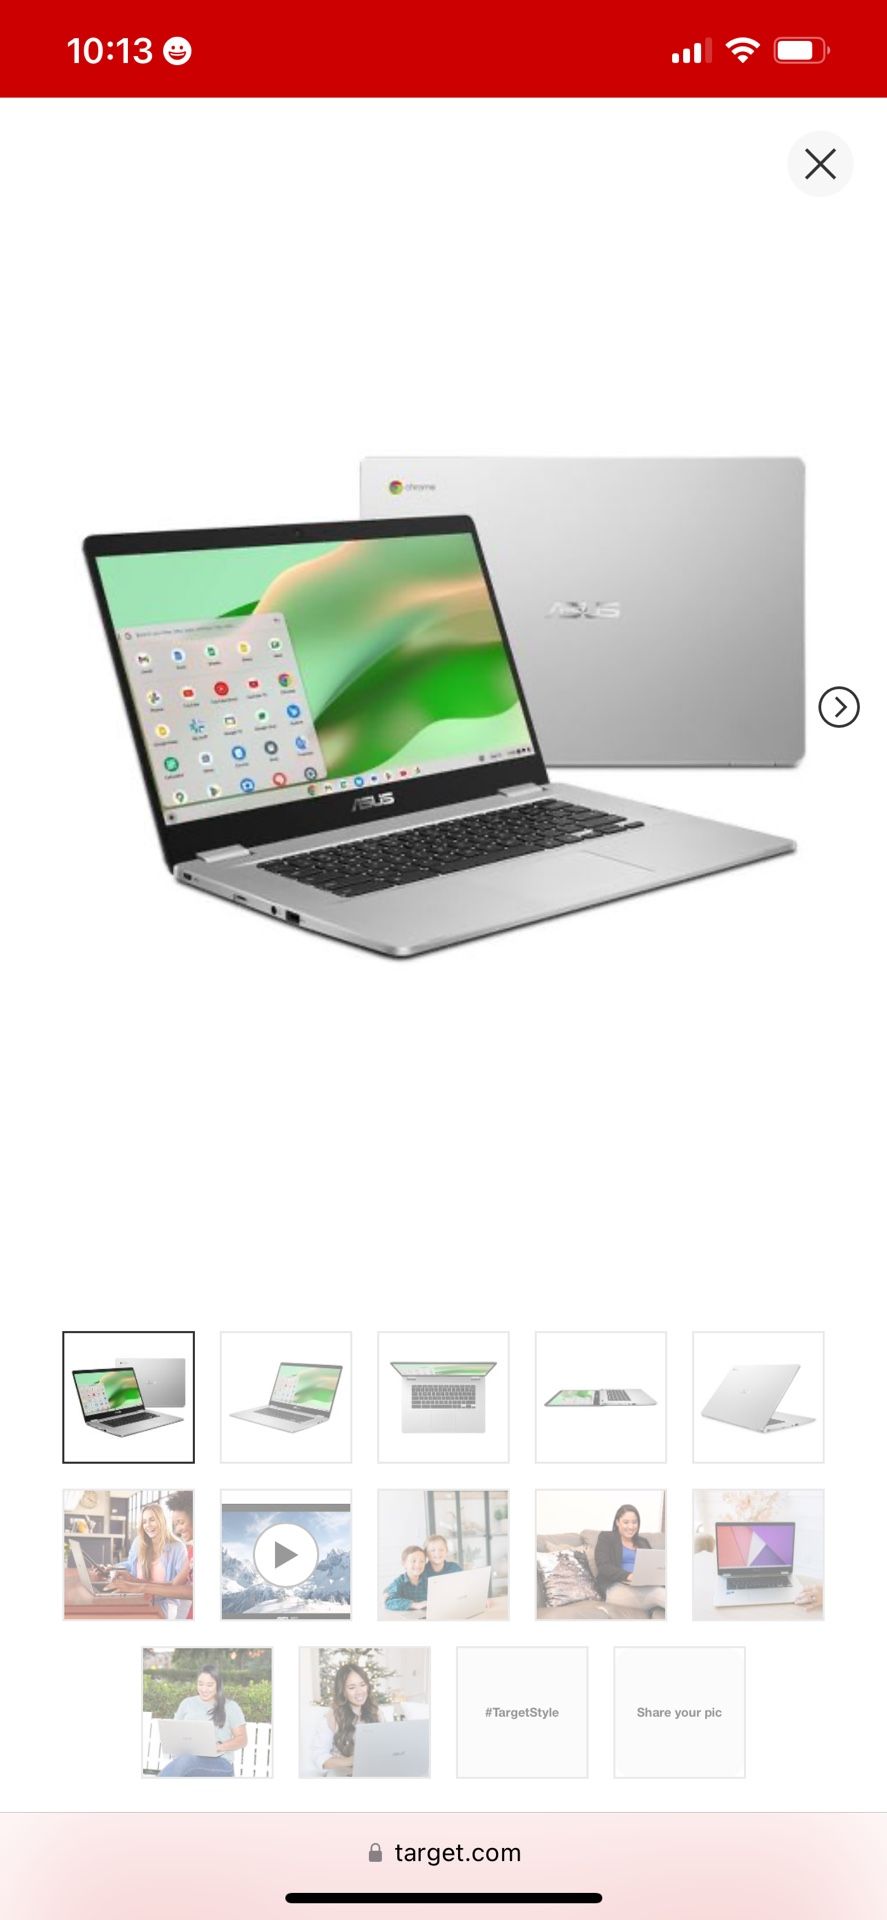 ASUS 15.6" Chromebook Laptop - Intel Processor - 4GB RAM - 64GB Storage - Silver (C523NA-TH44F)